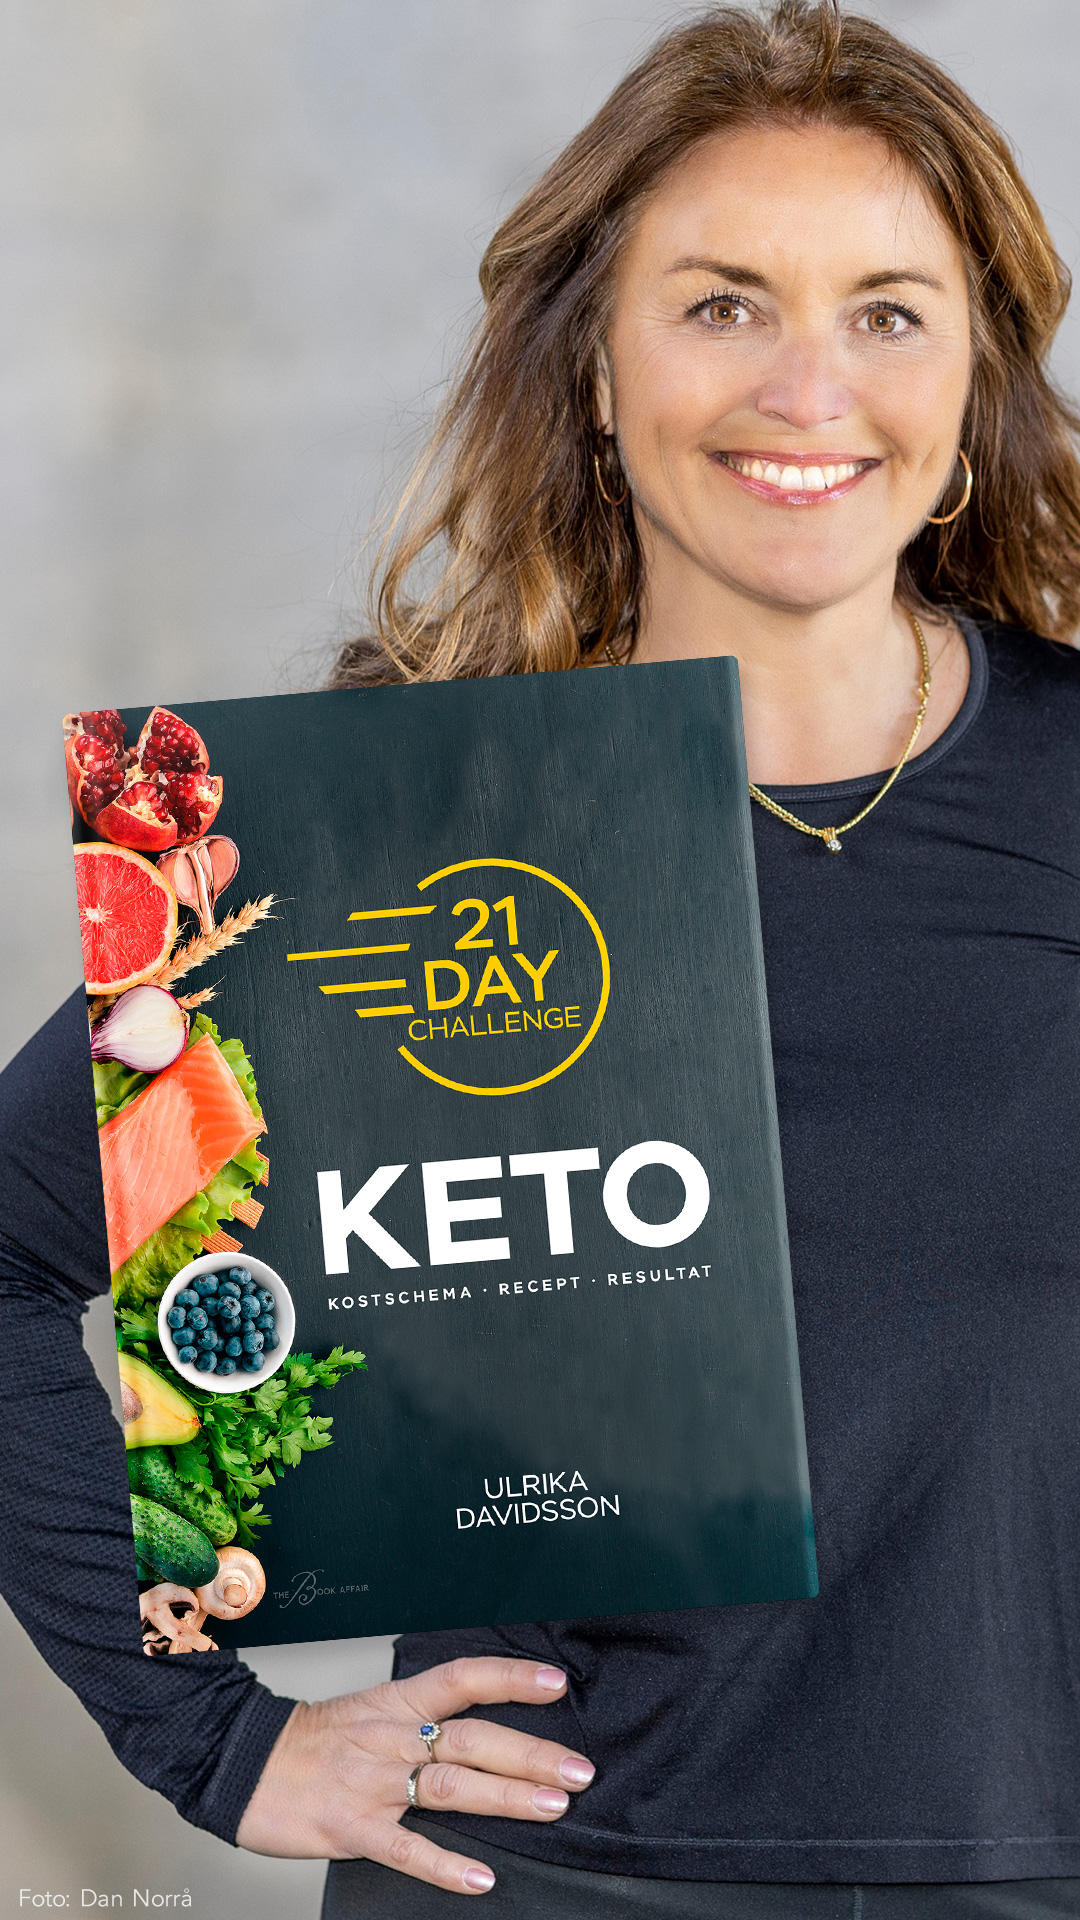 21 day challenge - keto